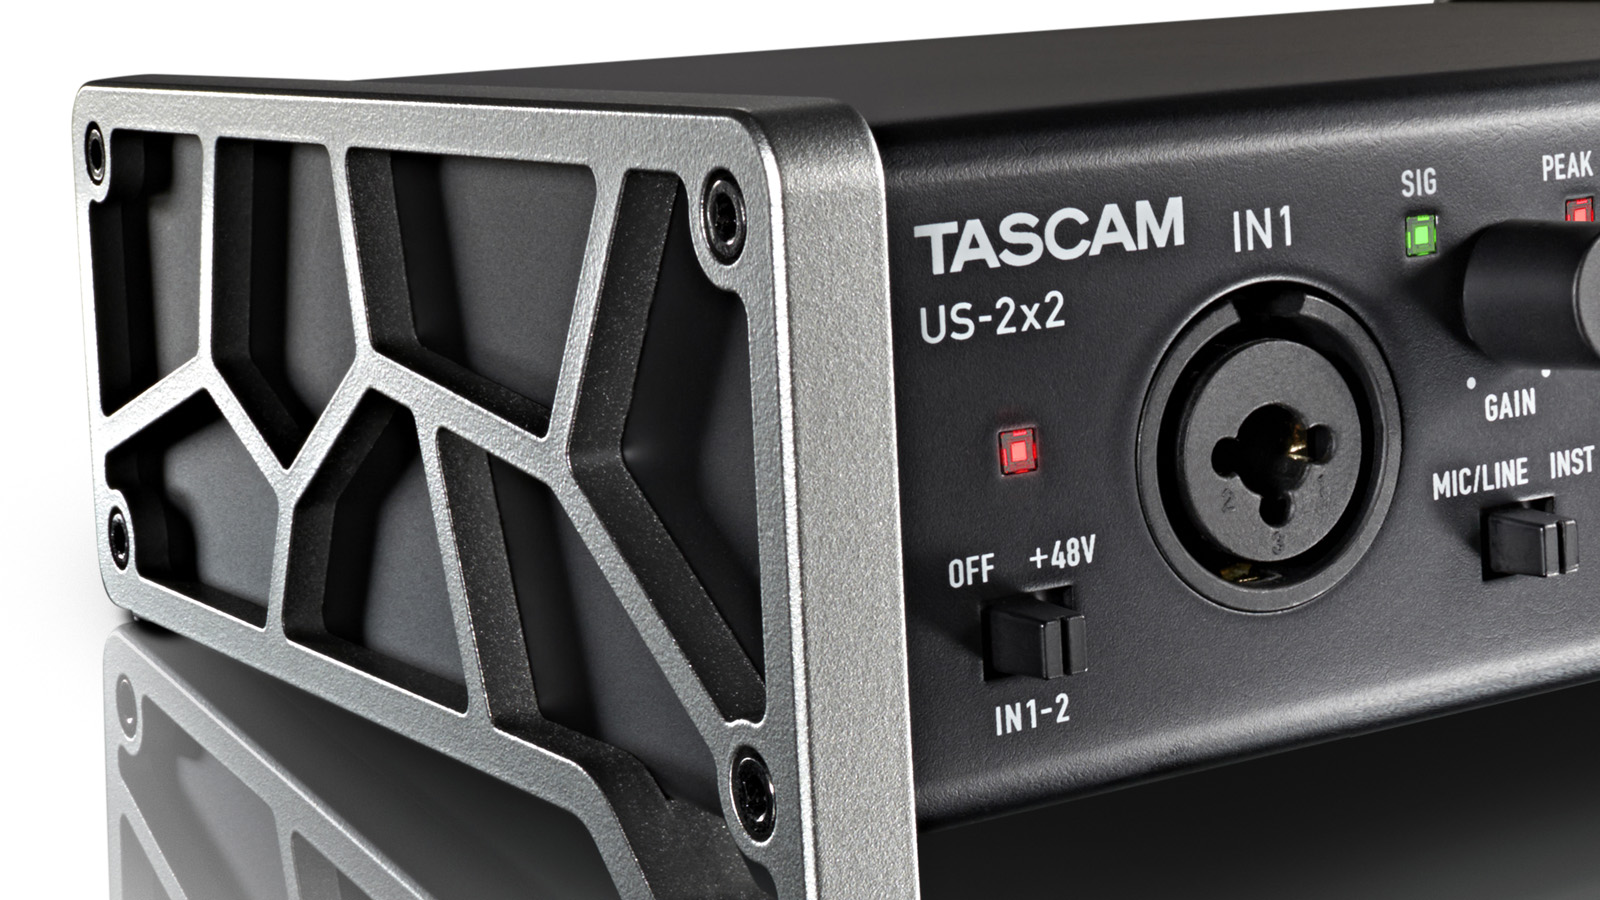 TASCAM USBオーディオ/MIDIインターフェース US-2x2-CU